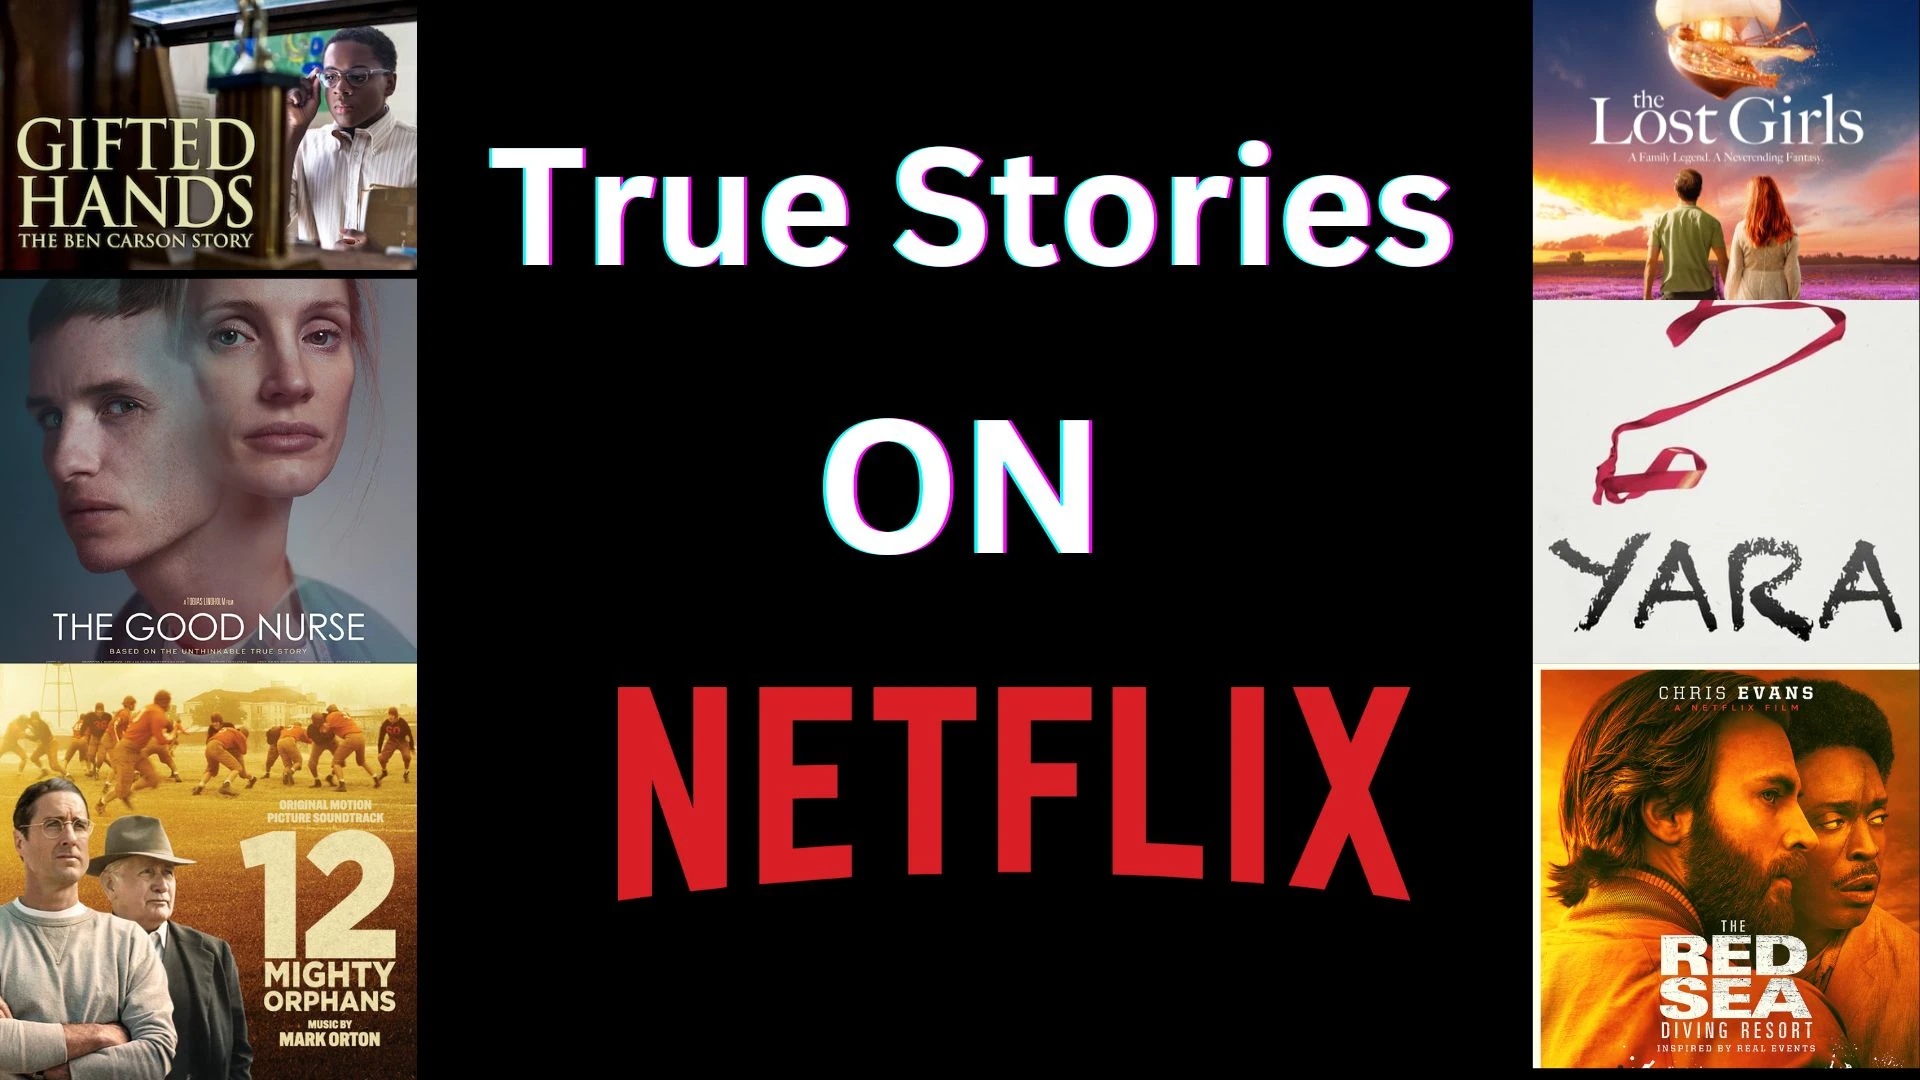 True Stories on Netflix